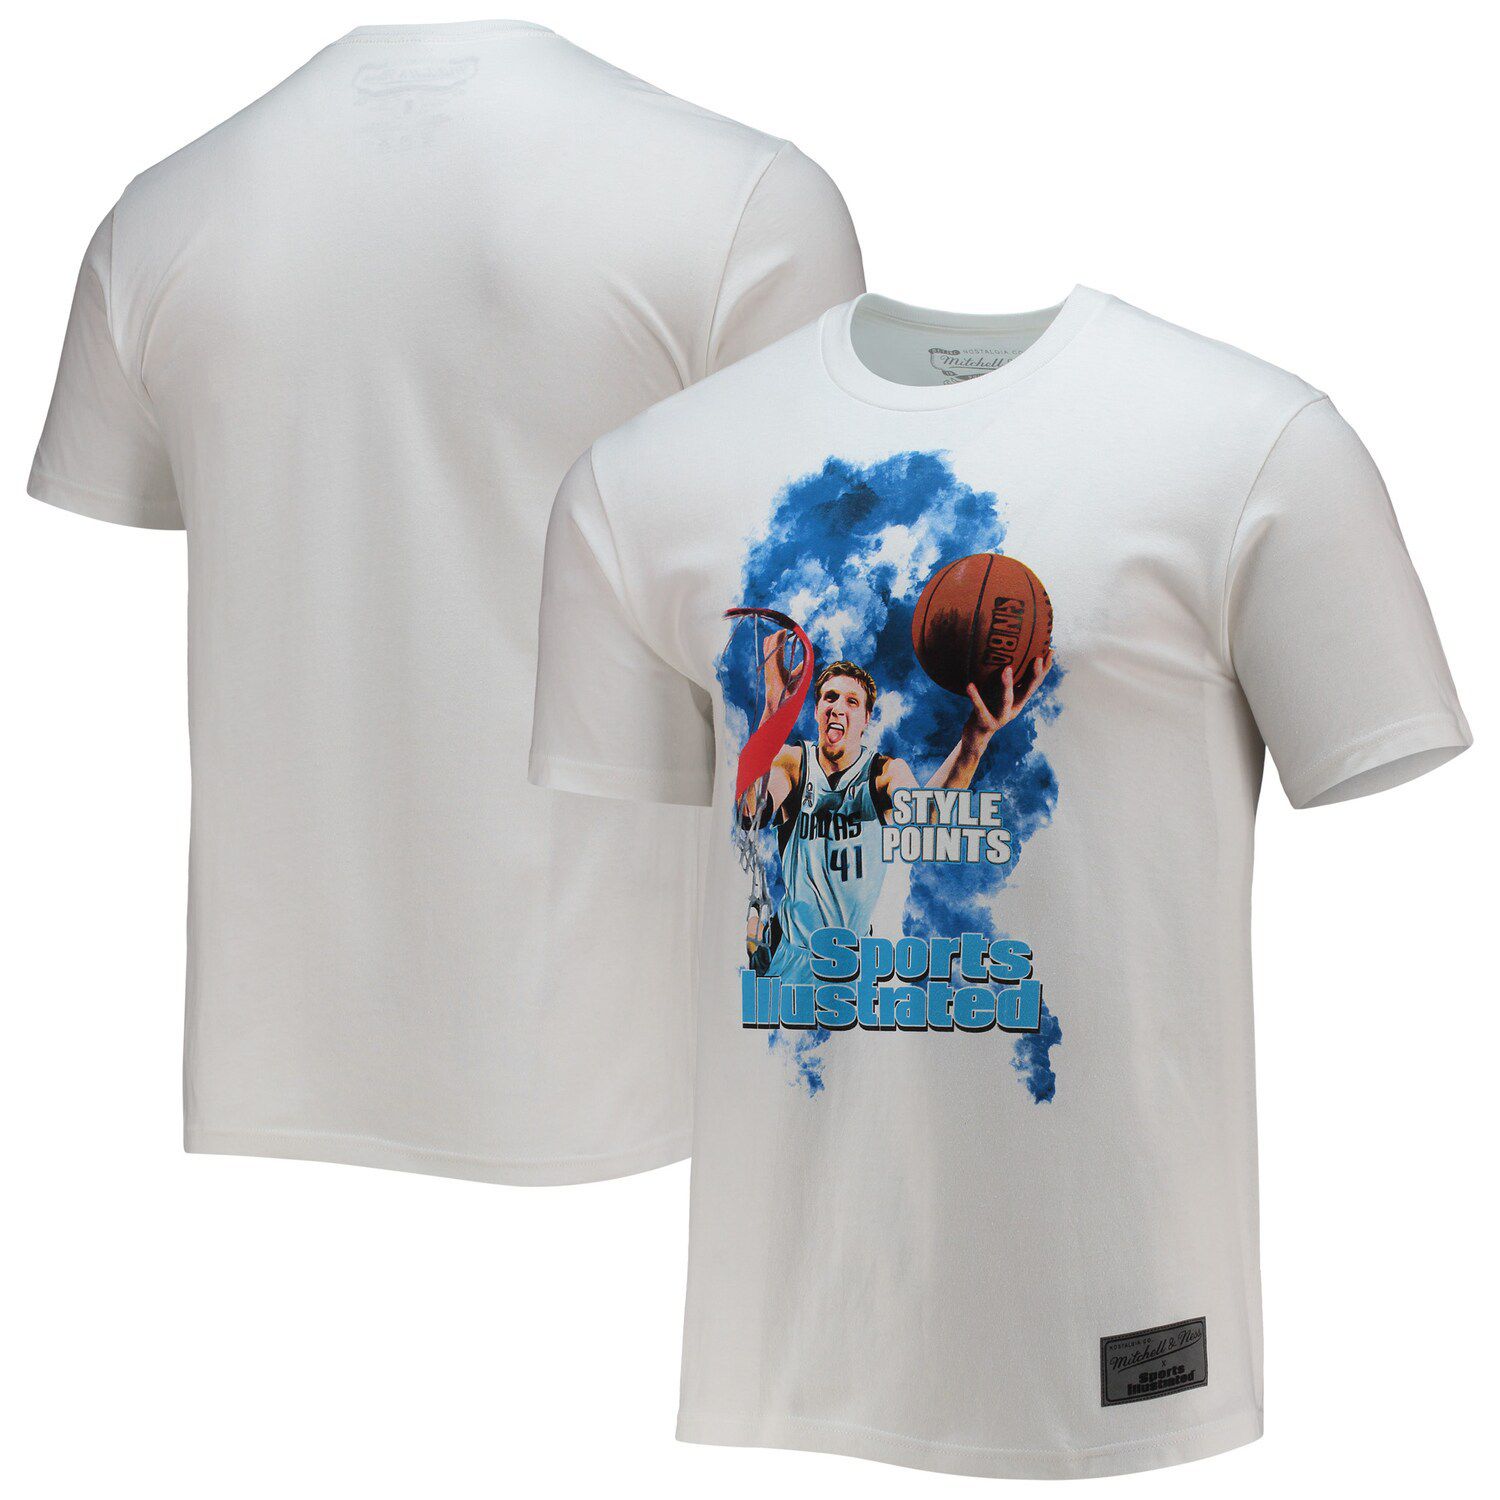 Мужская белая футболка Mitchell & Ness x Sports Illustrated Dirk Nowitzki с игроком Dallas Mavericks